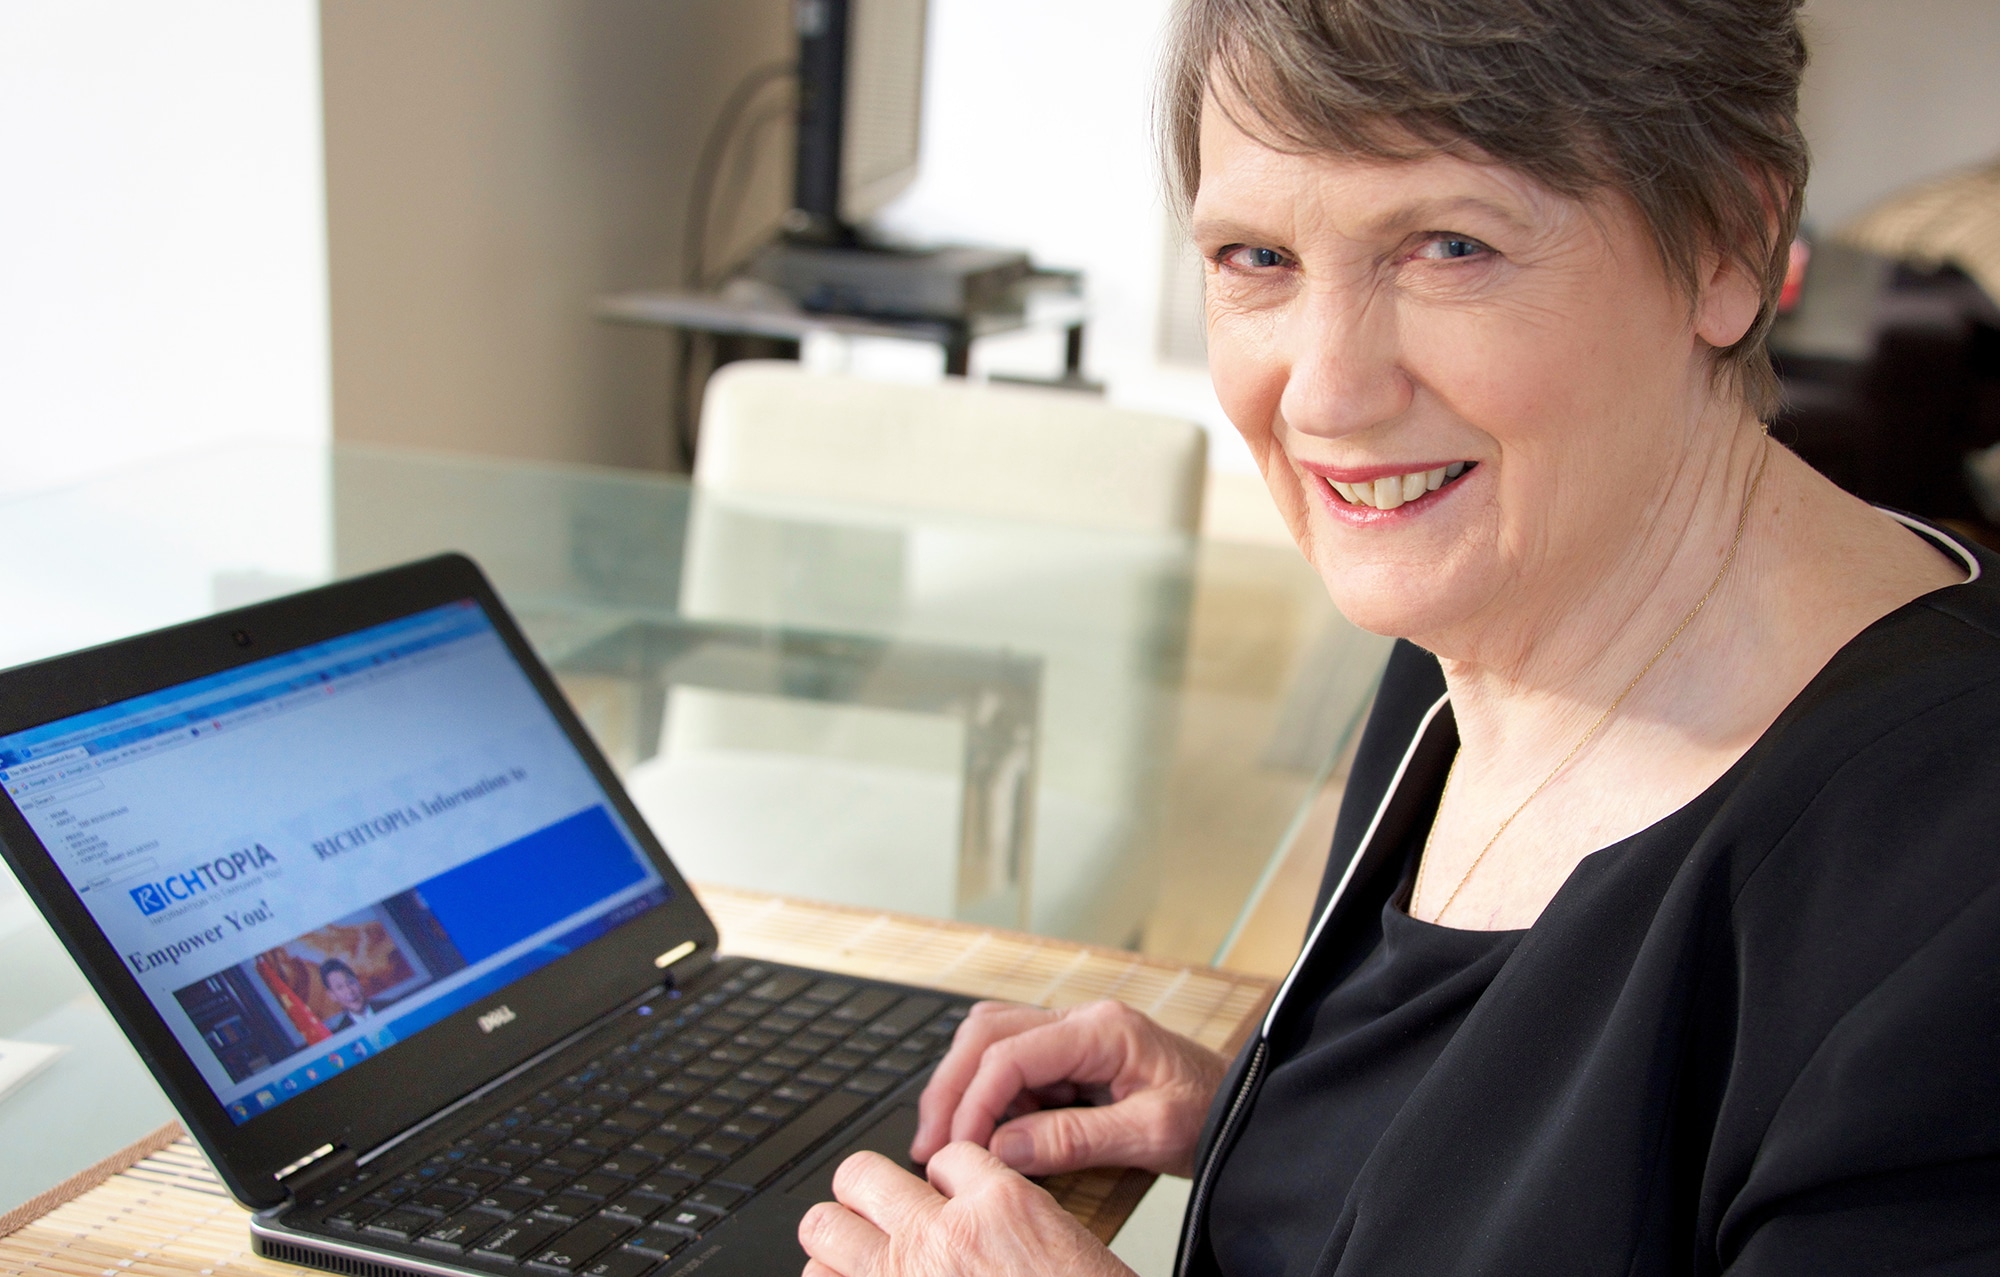 Picture of Helen Clark reading Richtopia.com on her laptop.